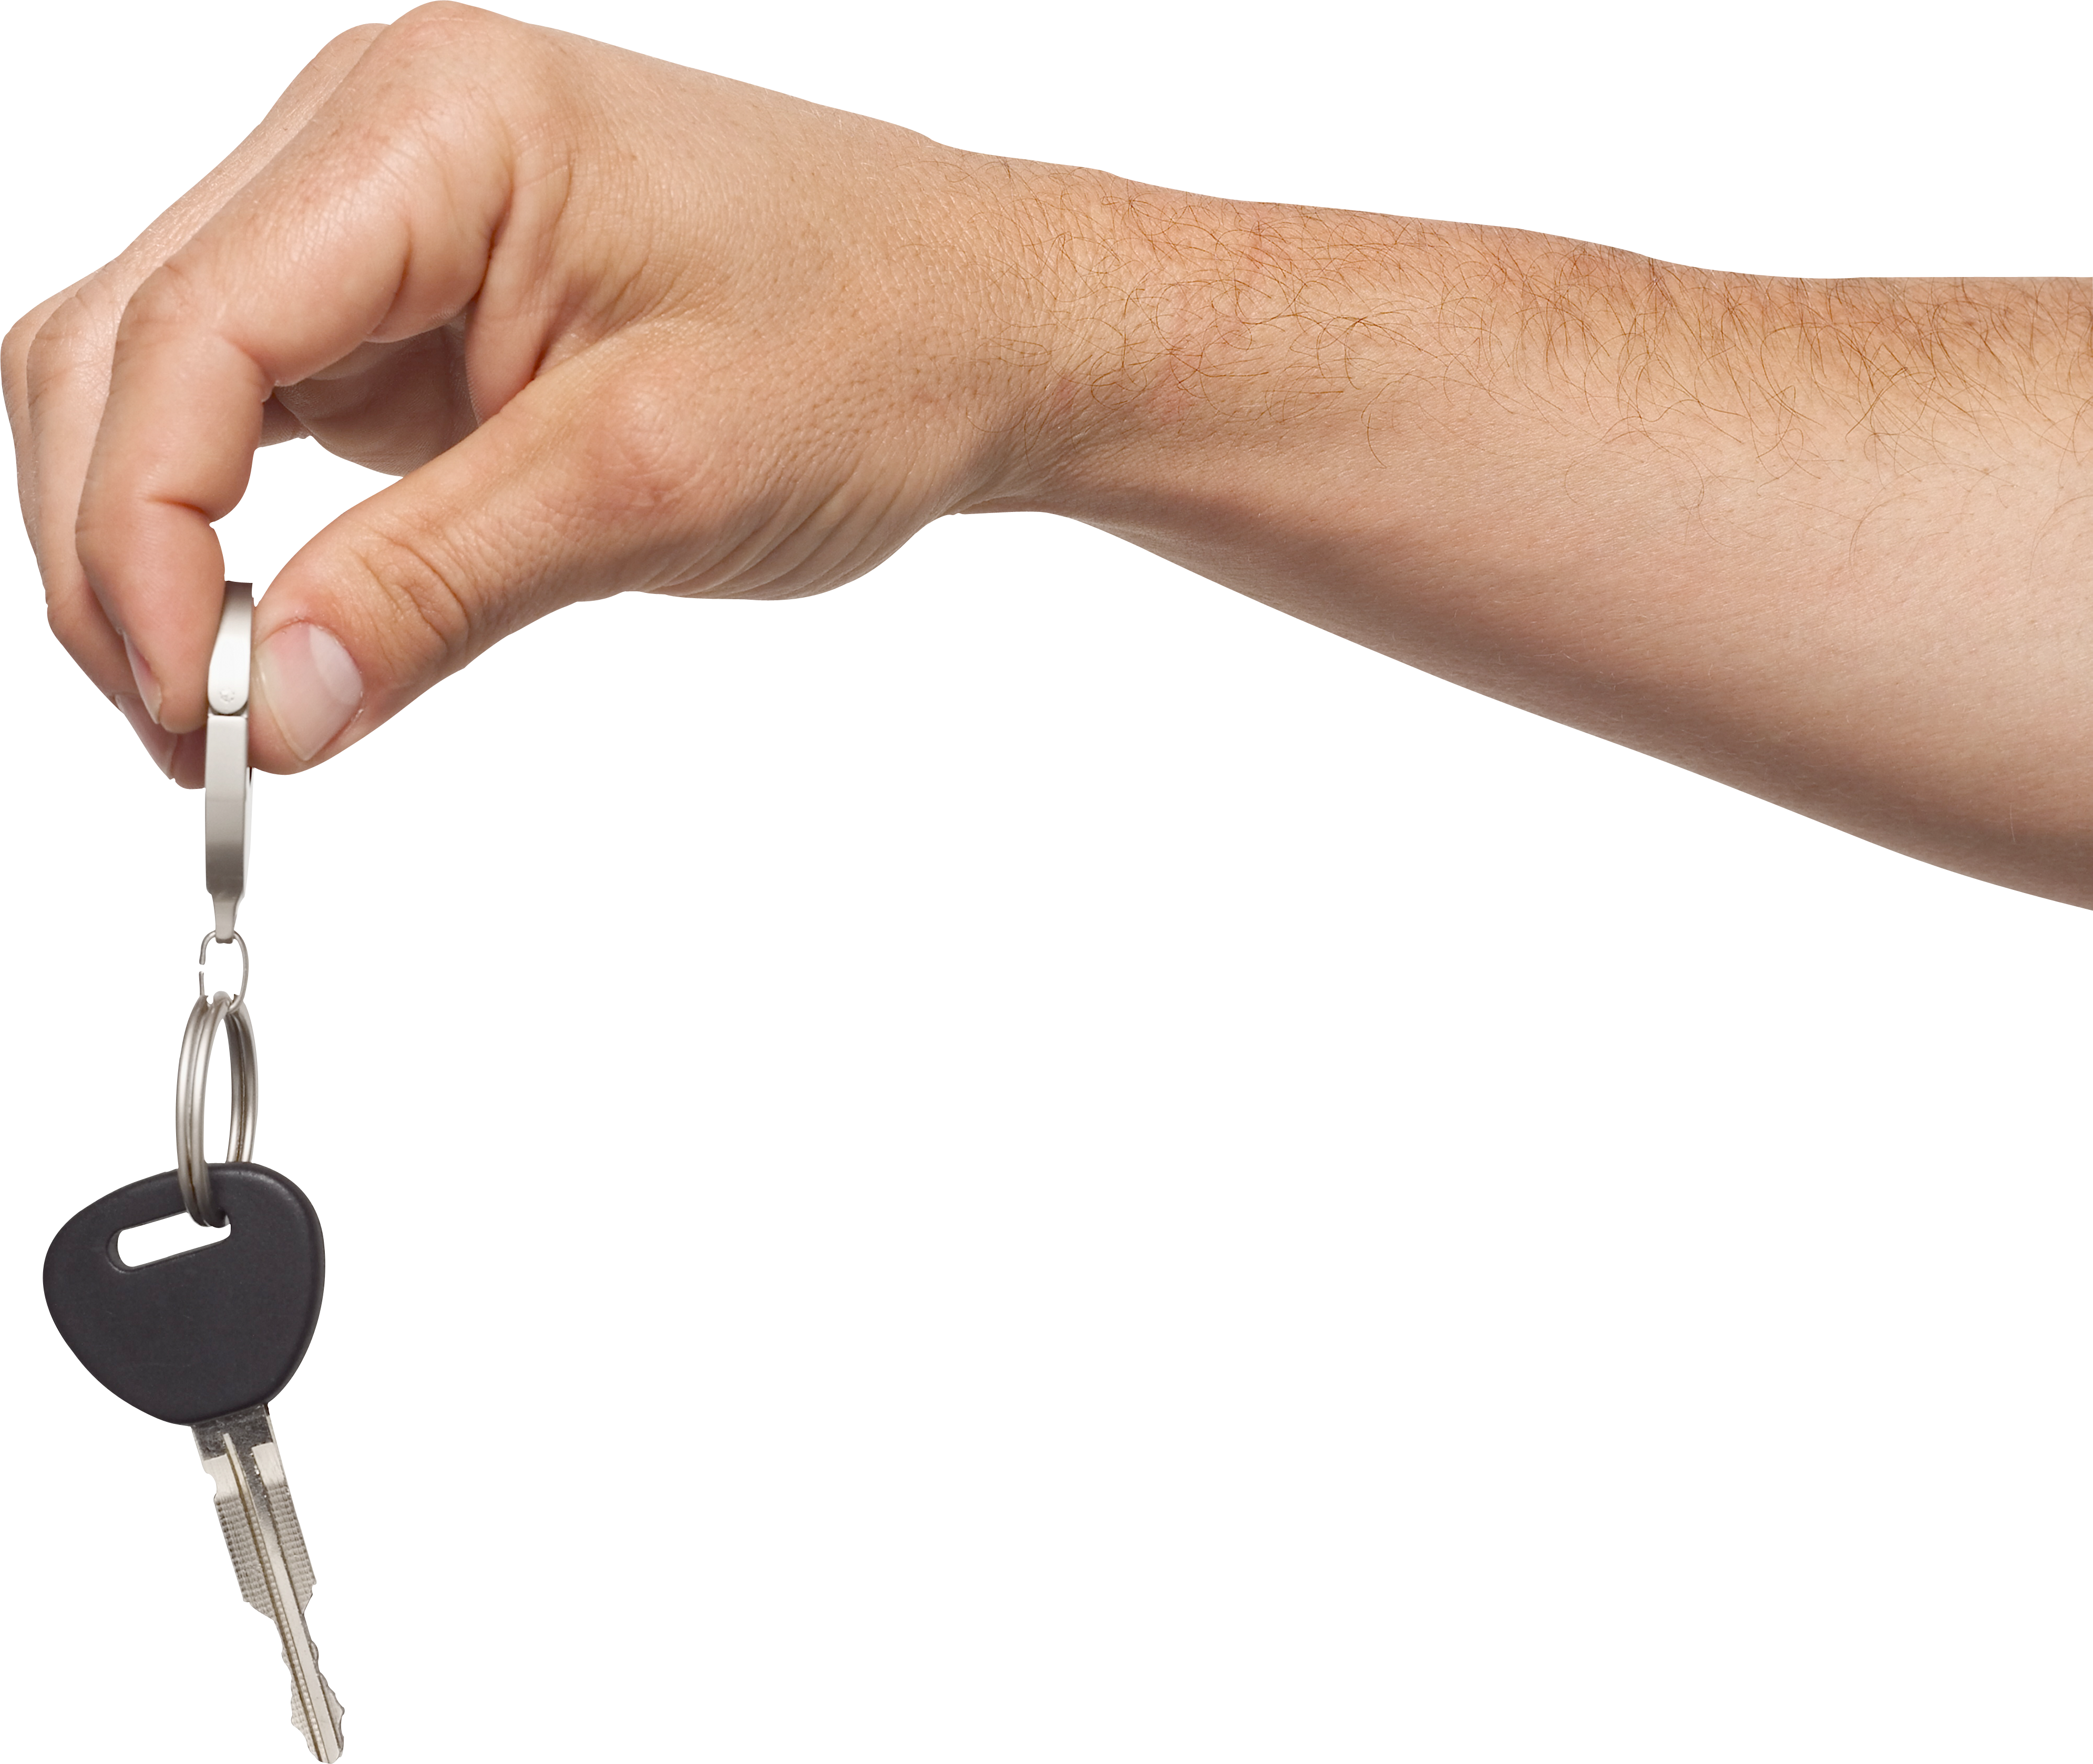 key clipart car key